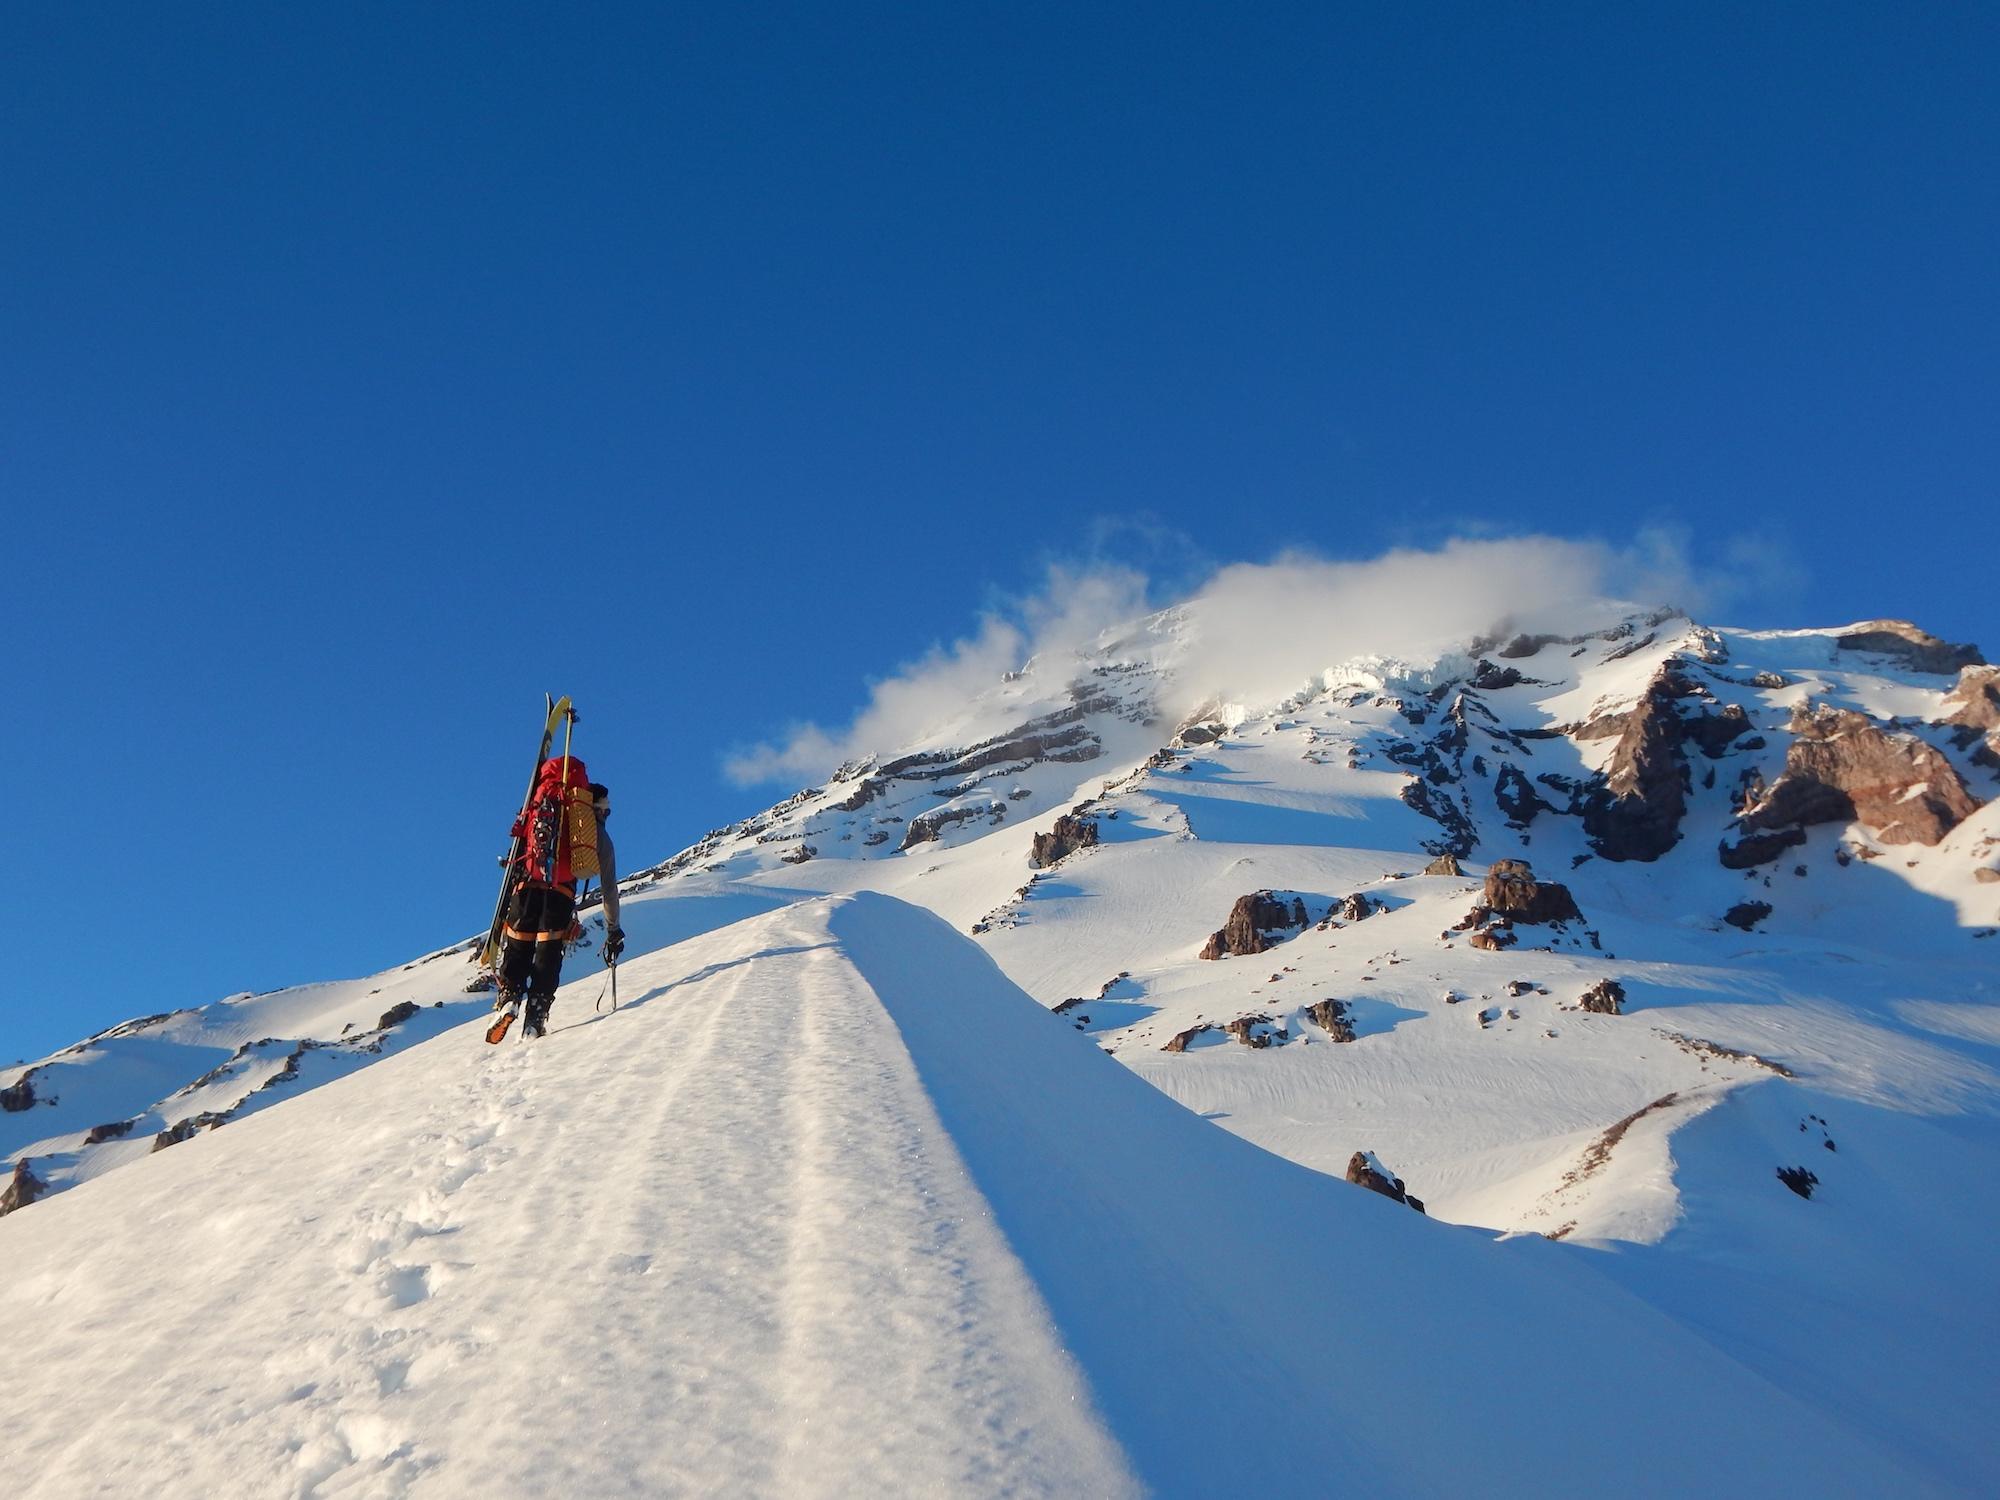 Conrad Wharton heads up slope at Mount Rainier National Park to make a ski run